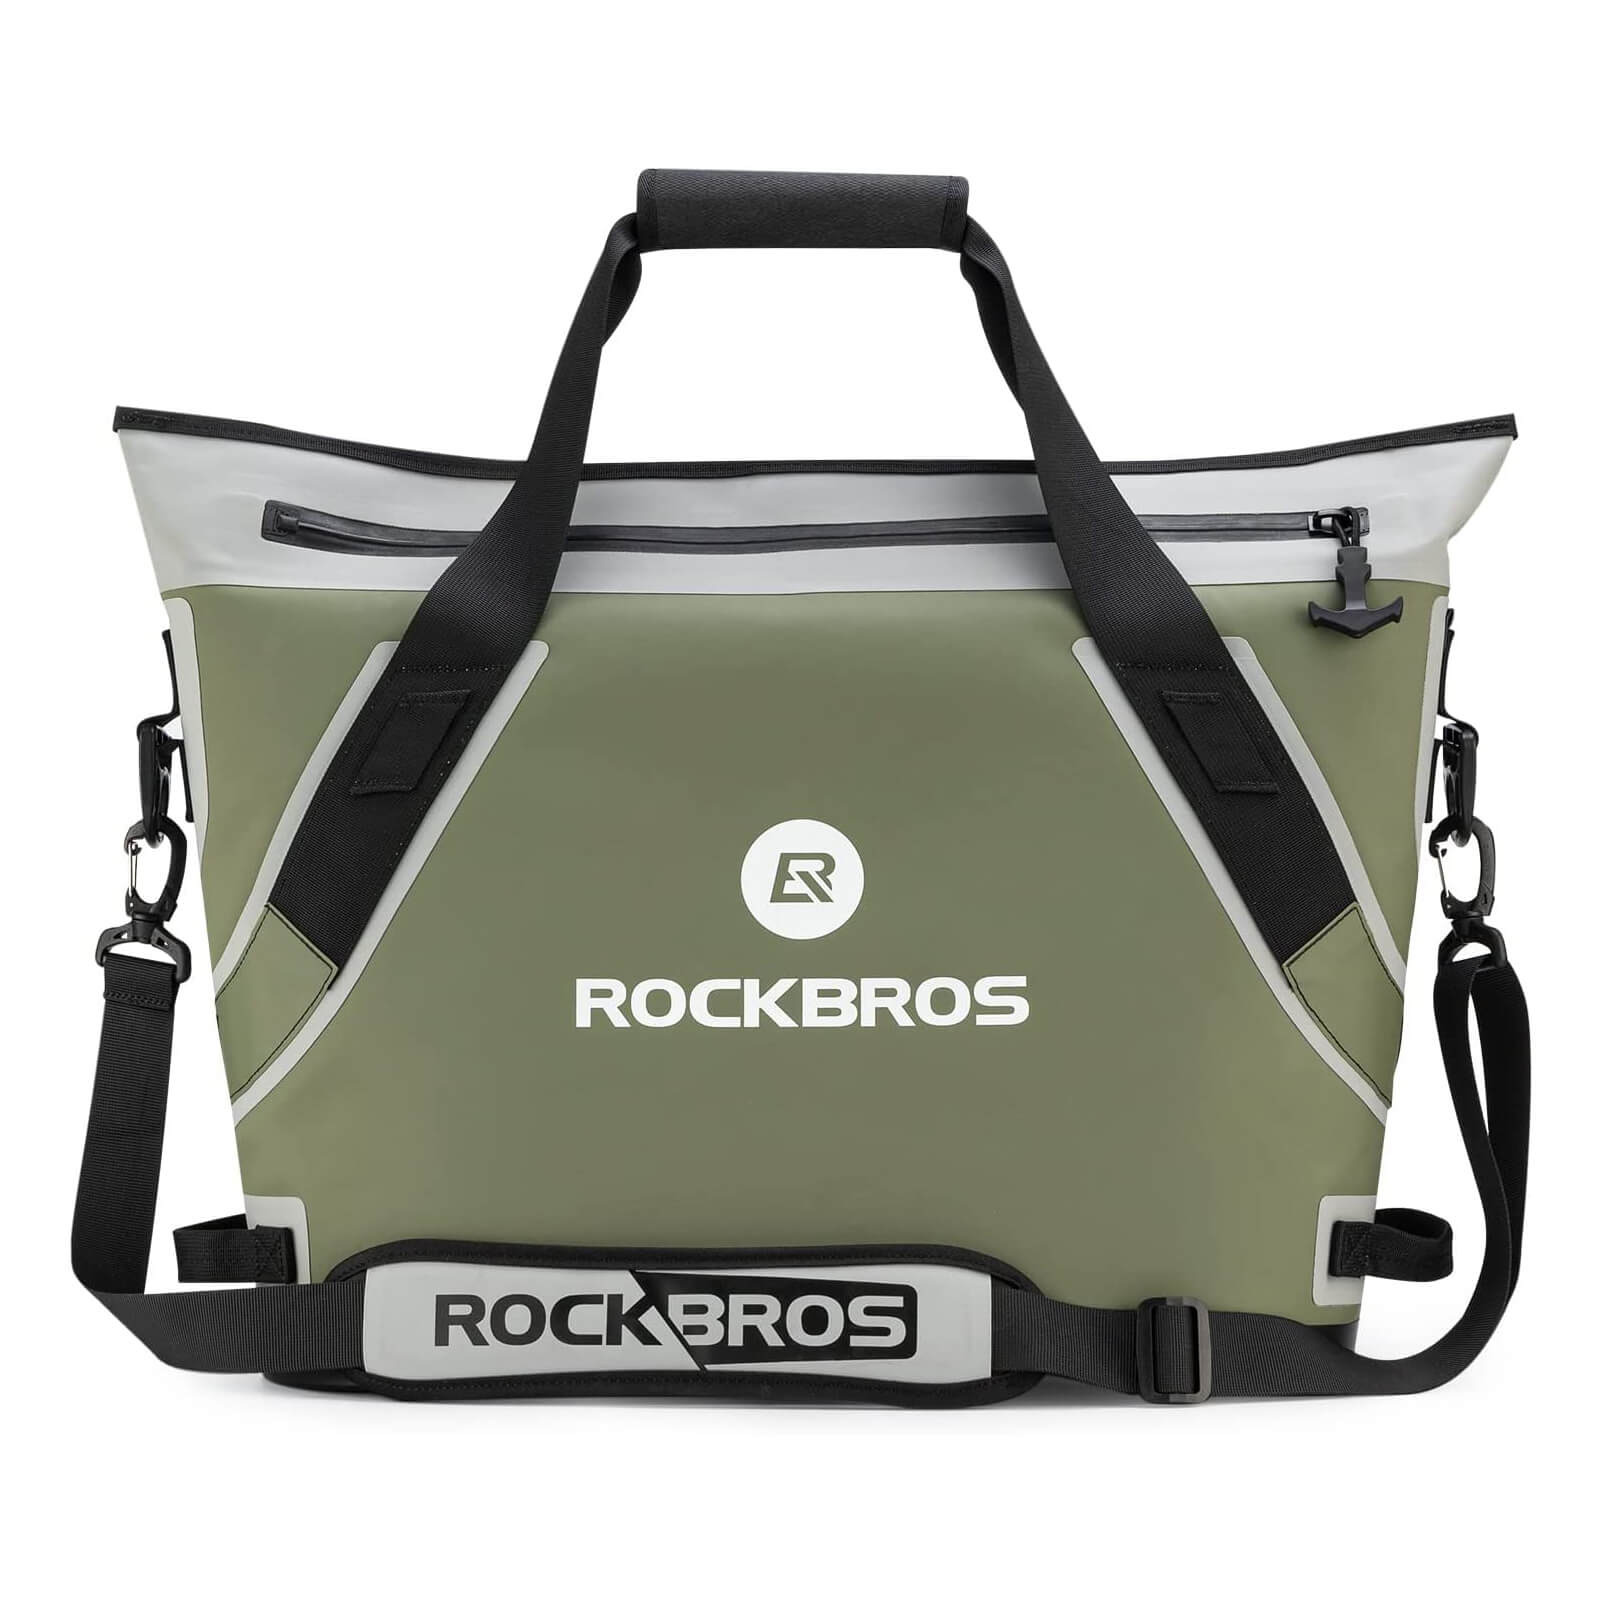 ROCKBROS Portable Soft Cooler Bag for Beach Floating Fishing